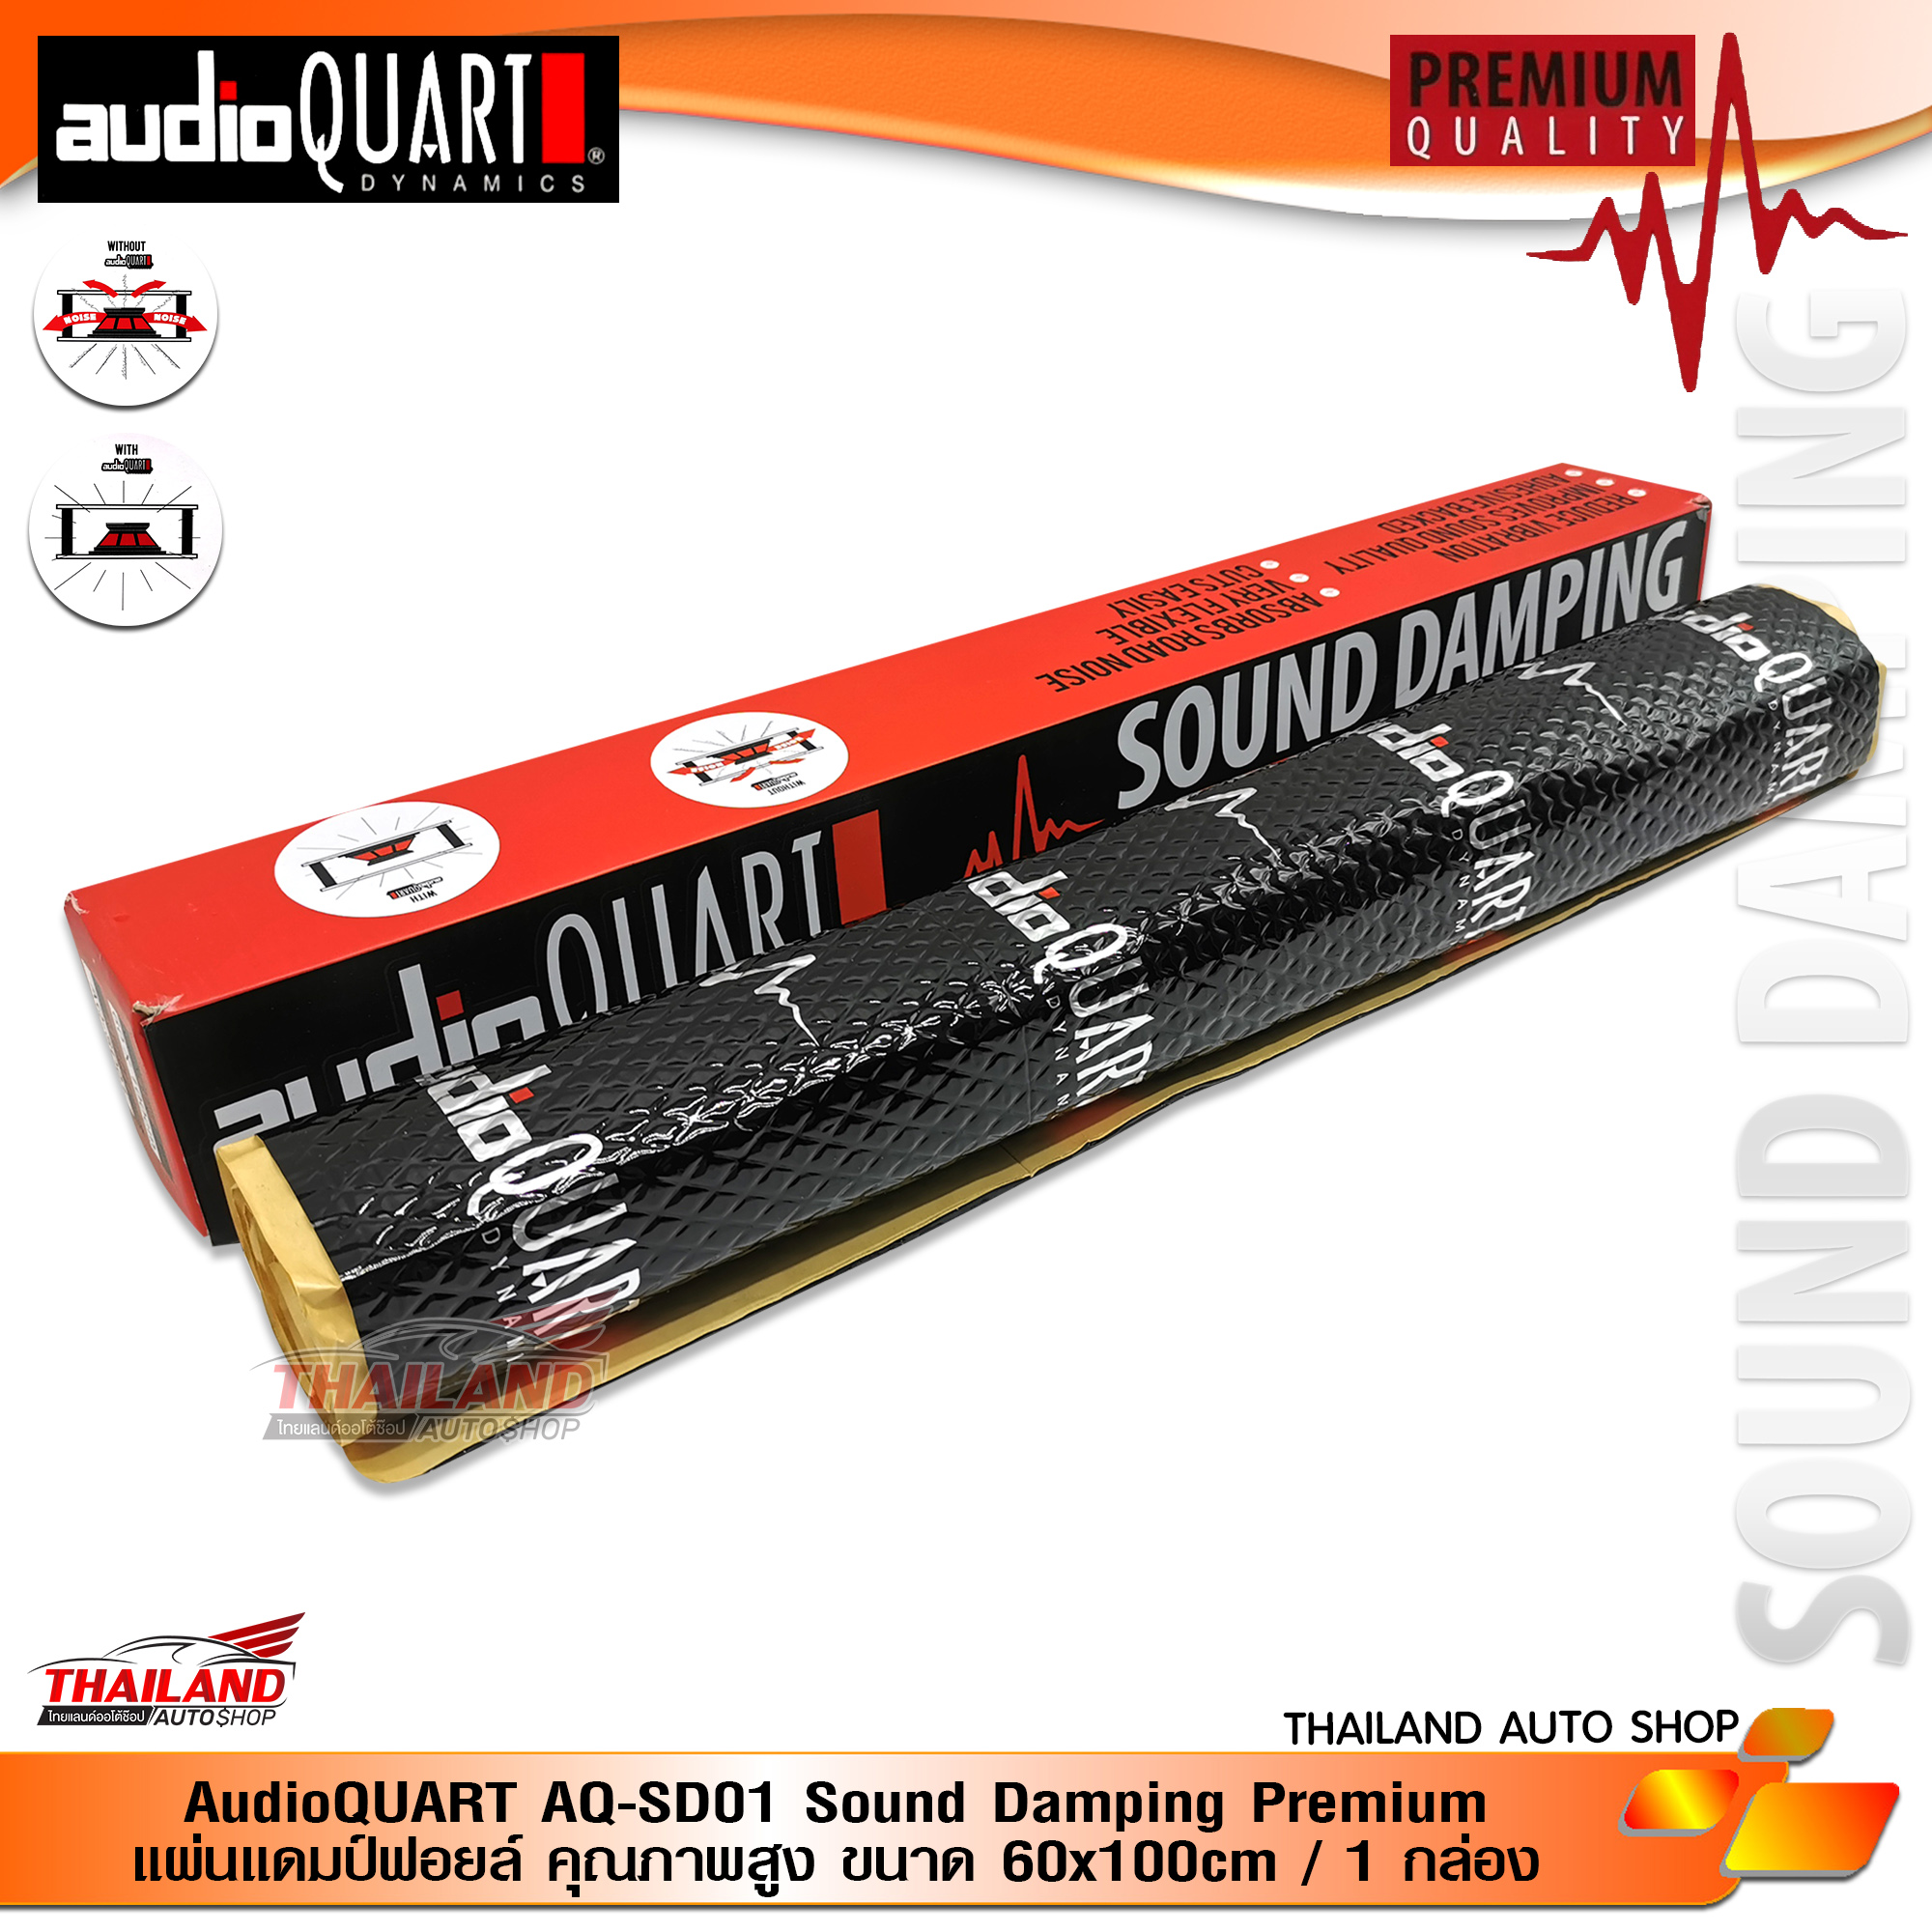 AUDIO QUART AQ-SD01 แผ่นแดมป์ฟอยล์ คุณภาพสูง Sound Damping Premium ขนาด 60x100cm / 1 กล่อง